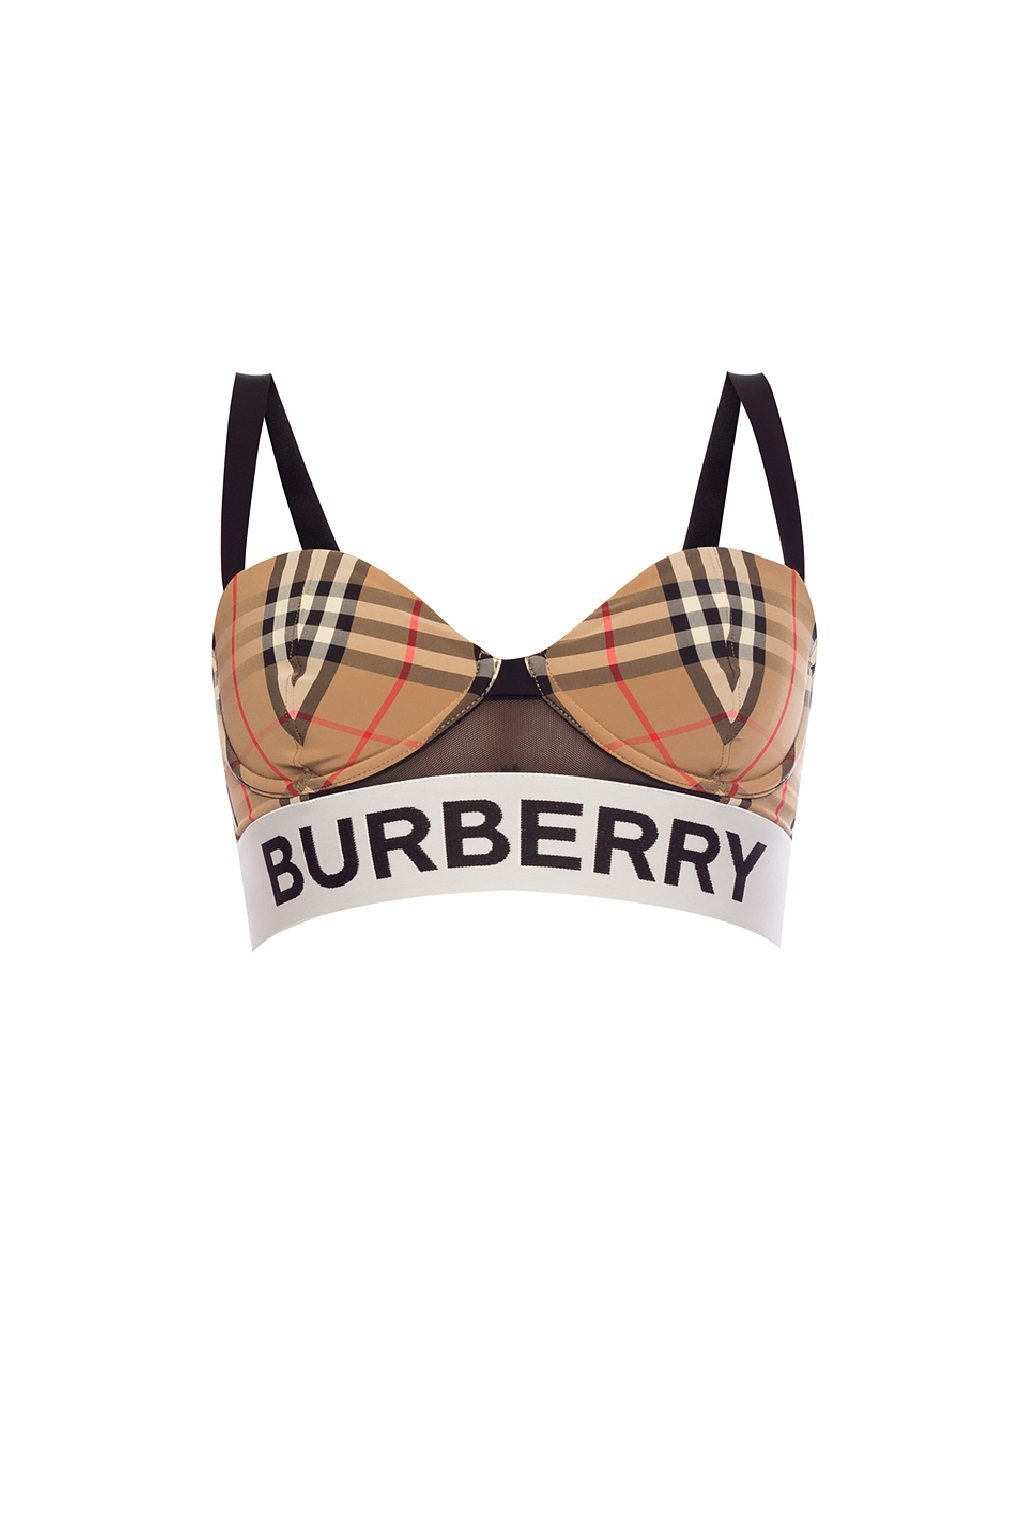 Burberry Logo bra | Women's Clothing | Vitkac